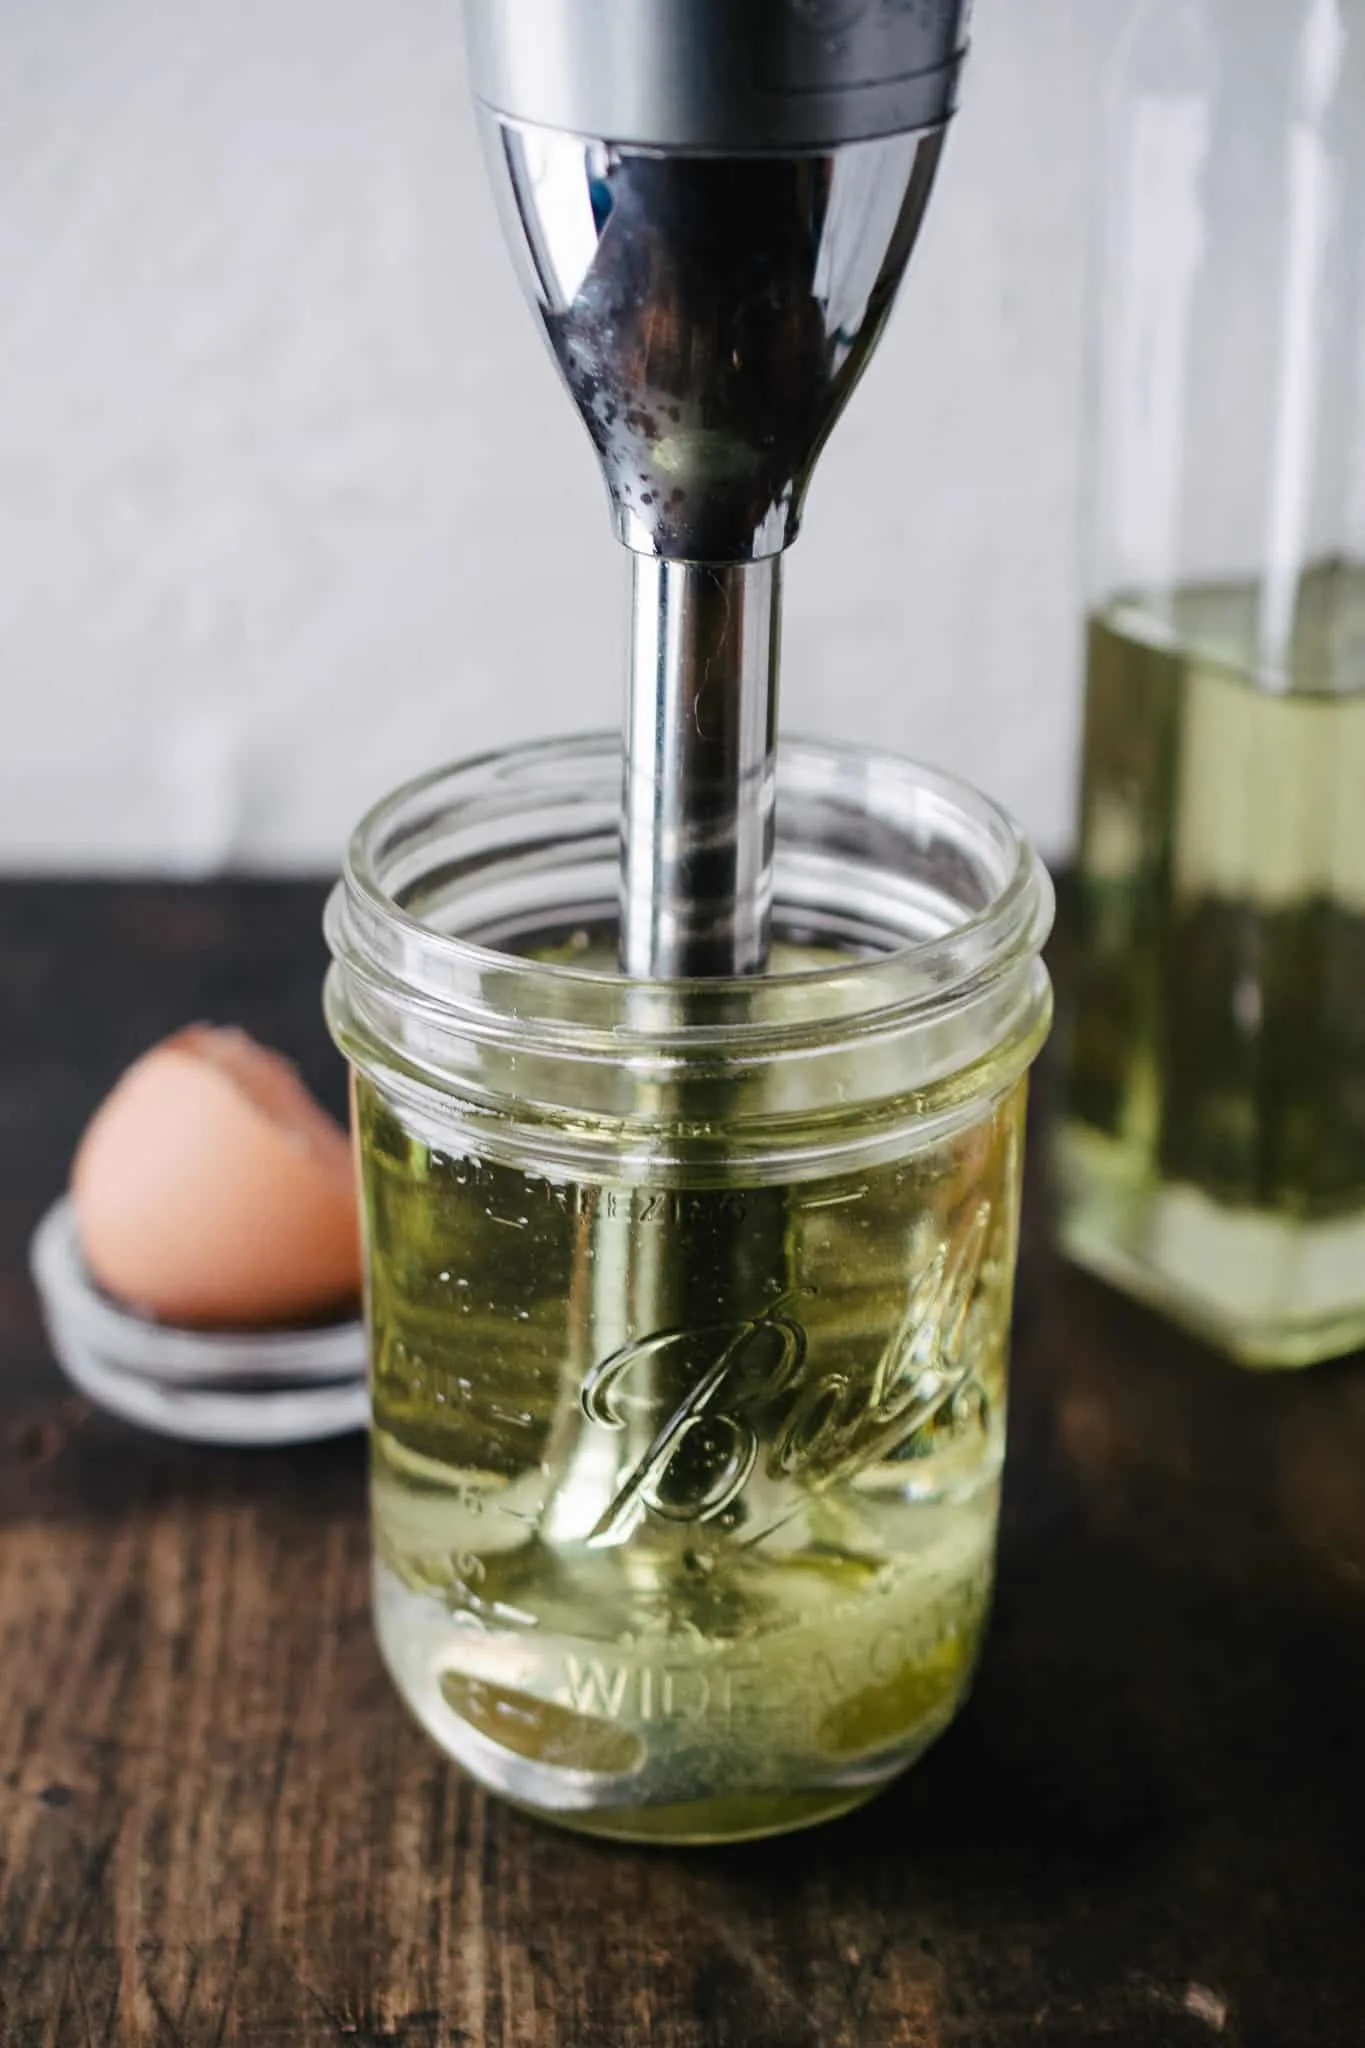 immersion blender in a jar of oil, lemon juice and egg yolk to make mayonnaise